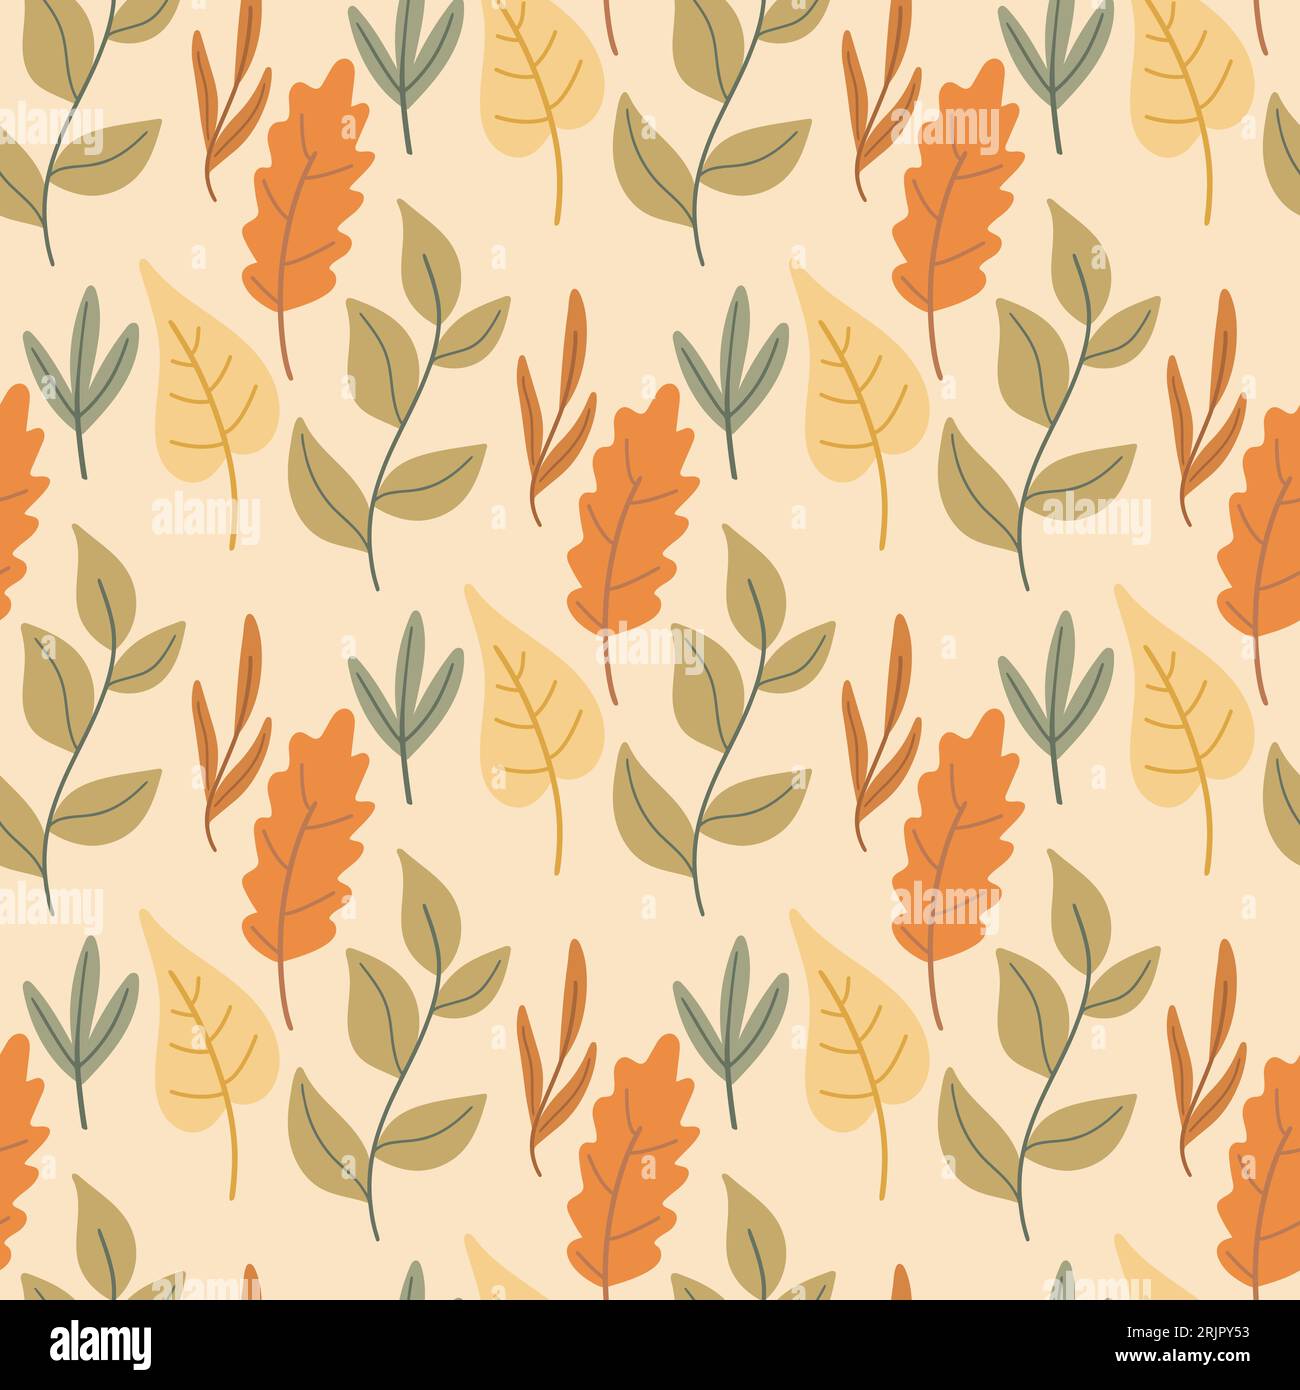 Cozy fall foliage seamless pattern. Cute autumn leaves background. Nature seasonal print for wallpaper, textile, design, ketor illustration Stock Vector